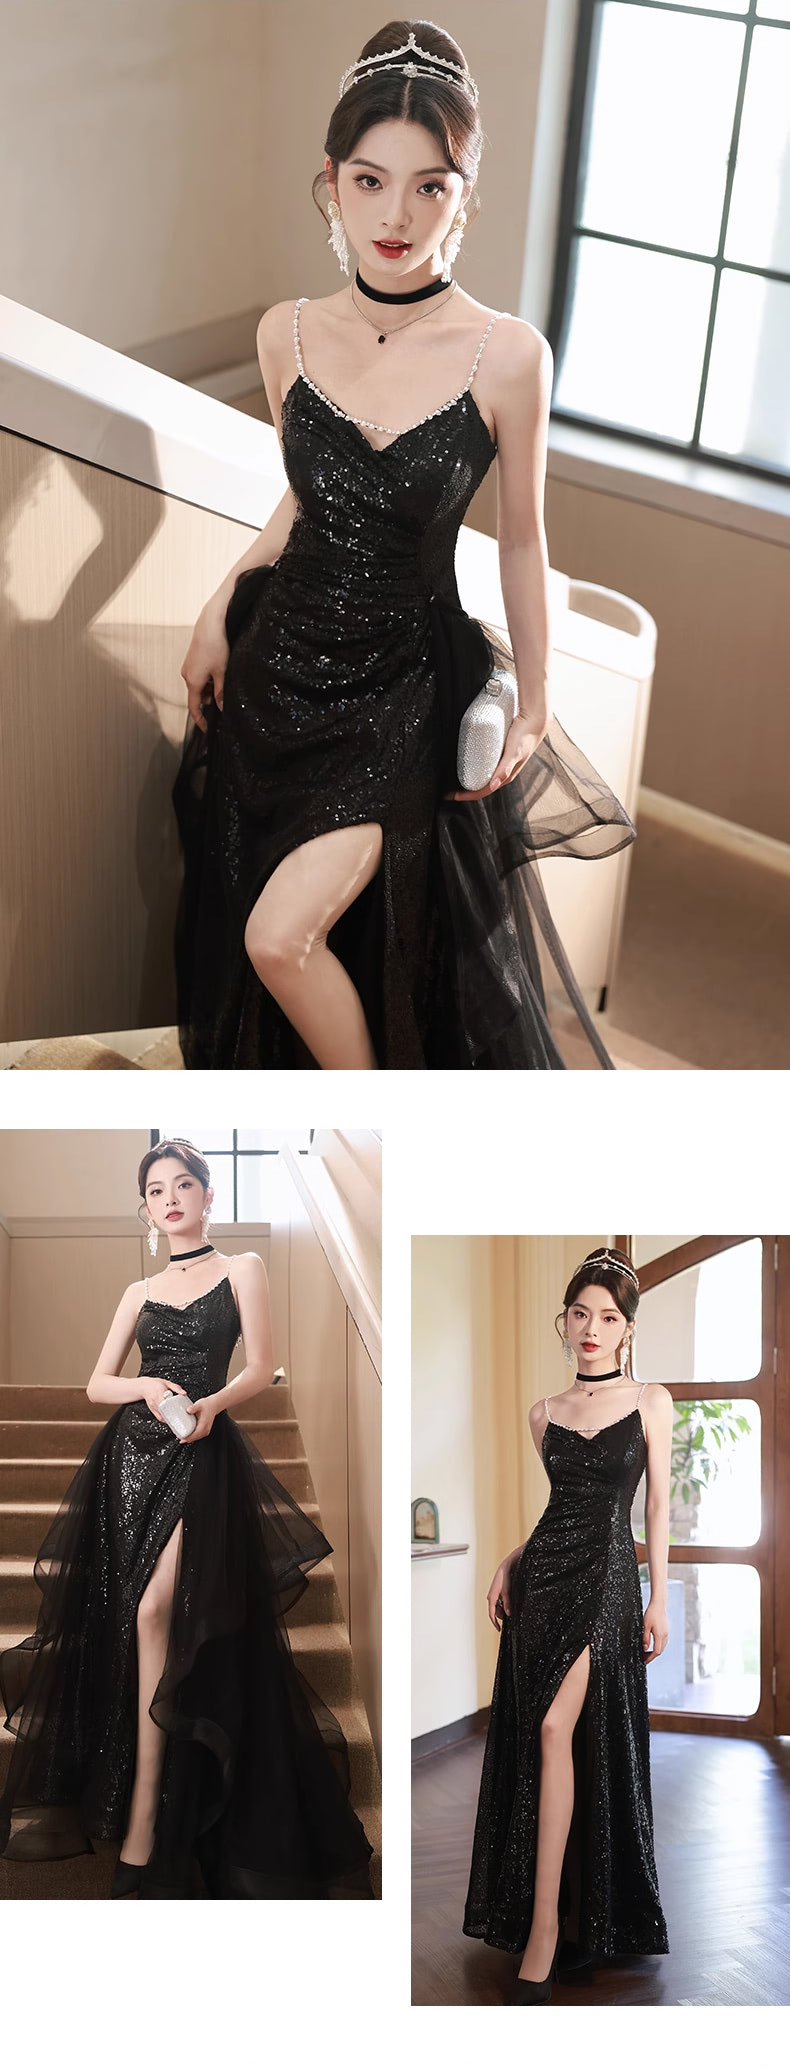 Luxury-Black-Banquet-Party-Evening-Long-Dress-Sleeveless-Ball-Gown15